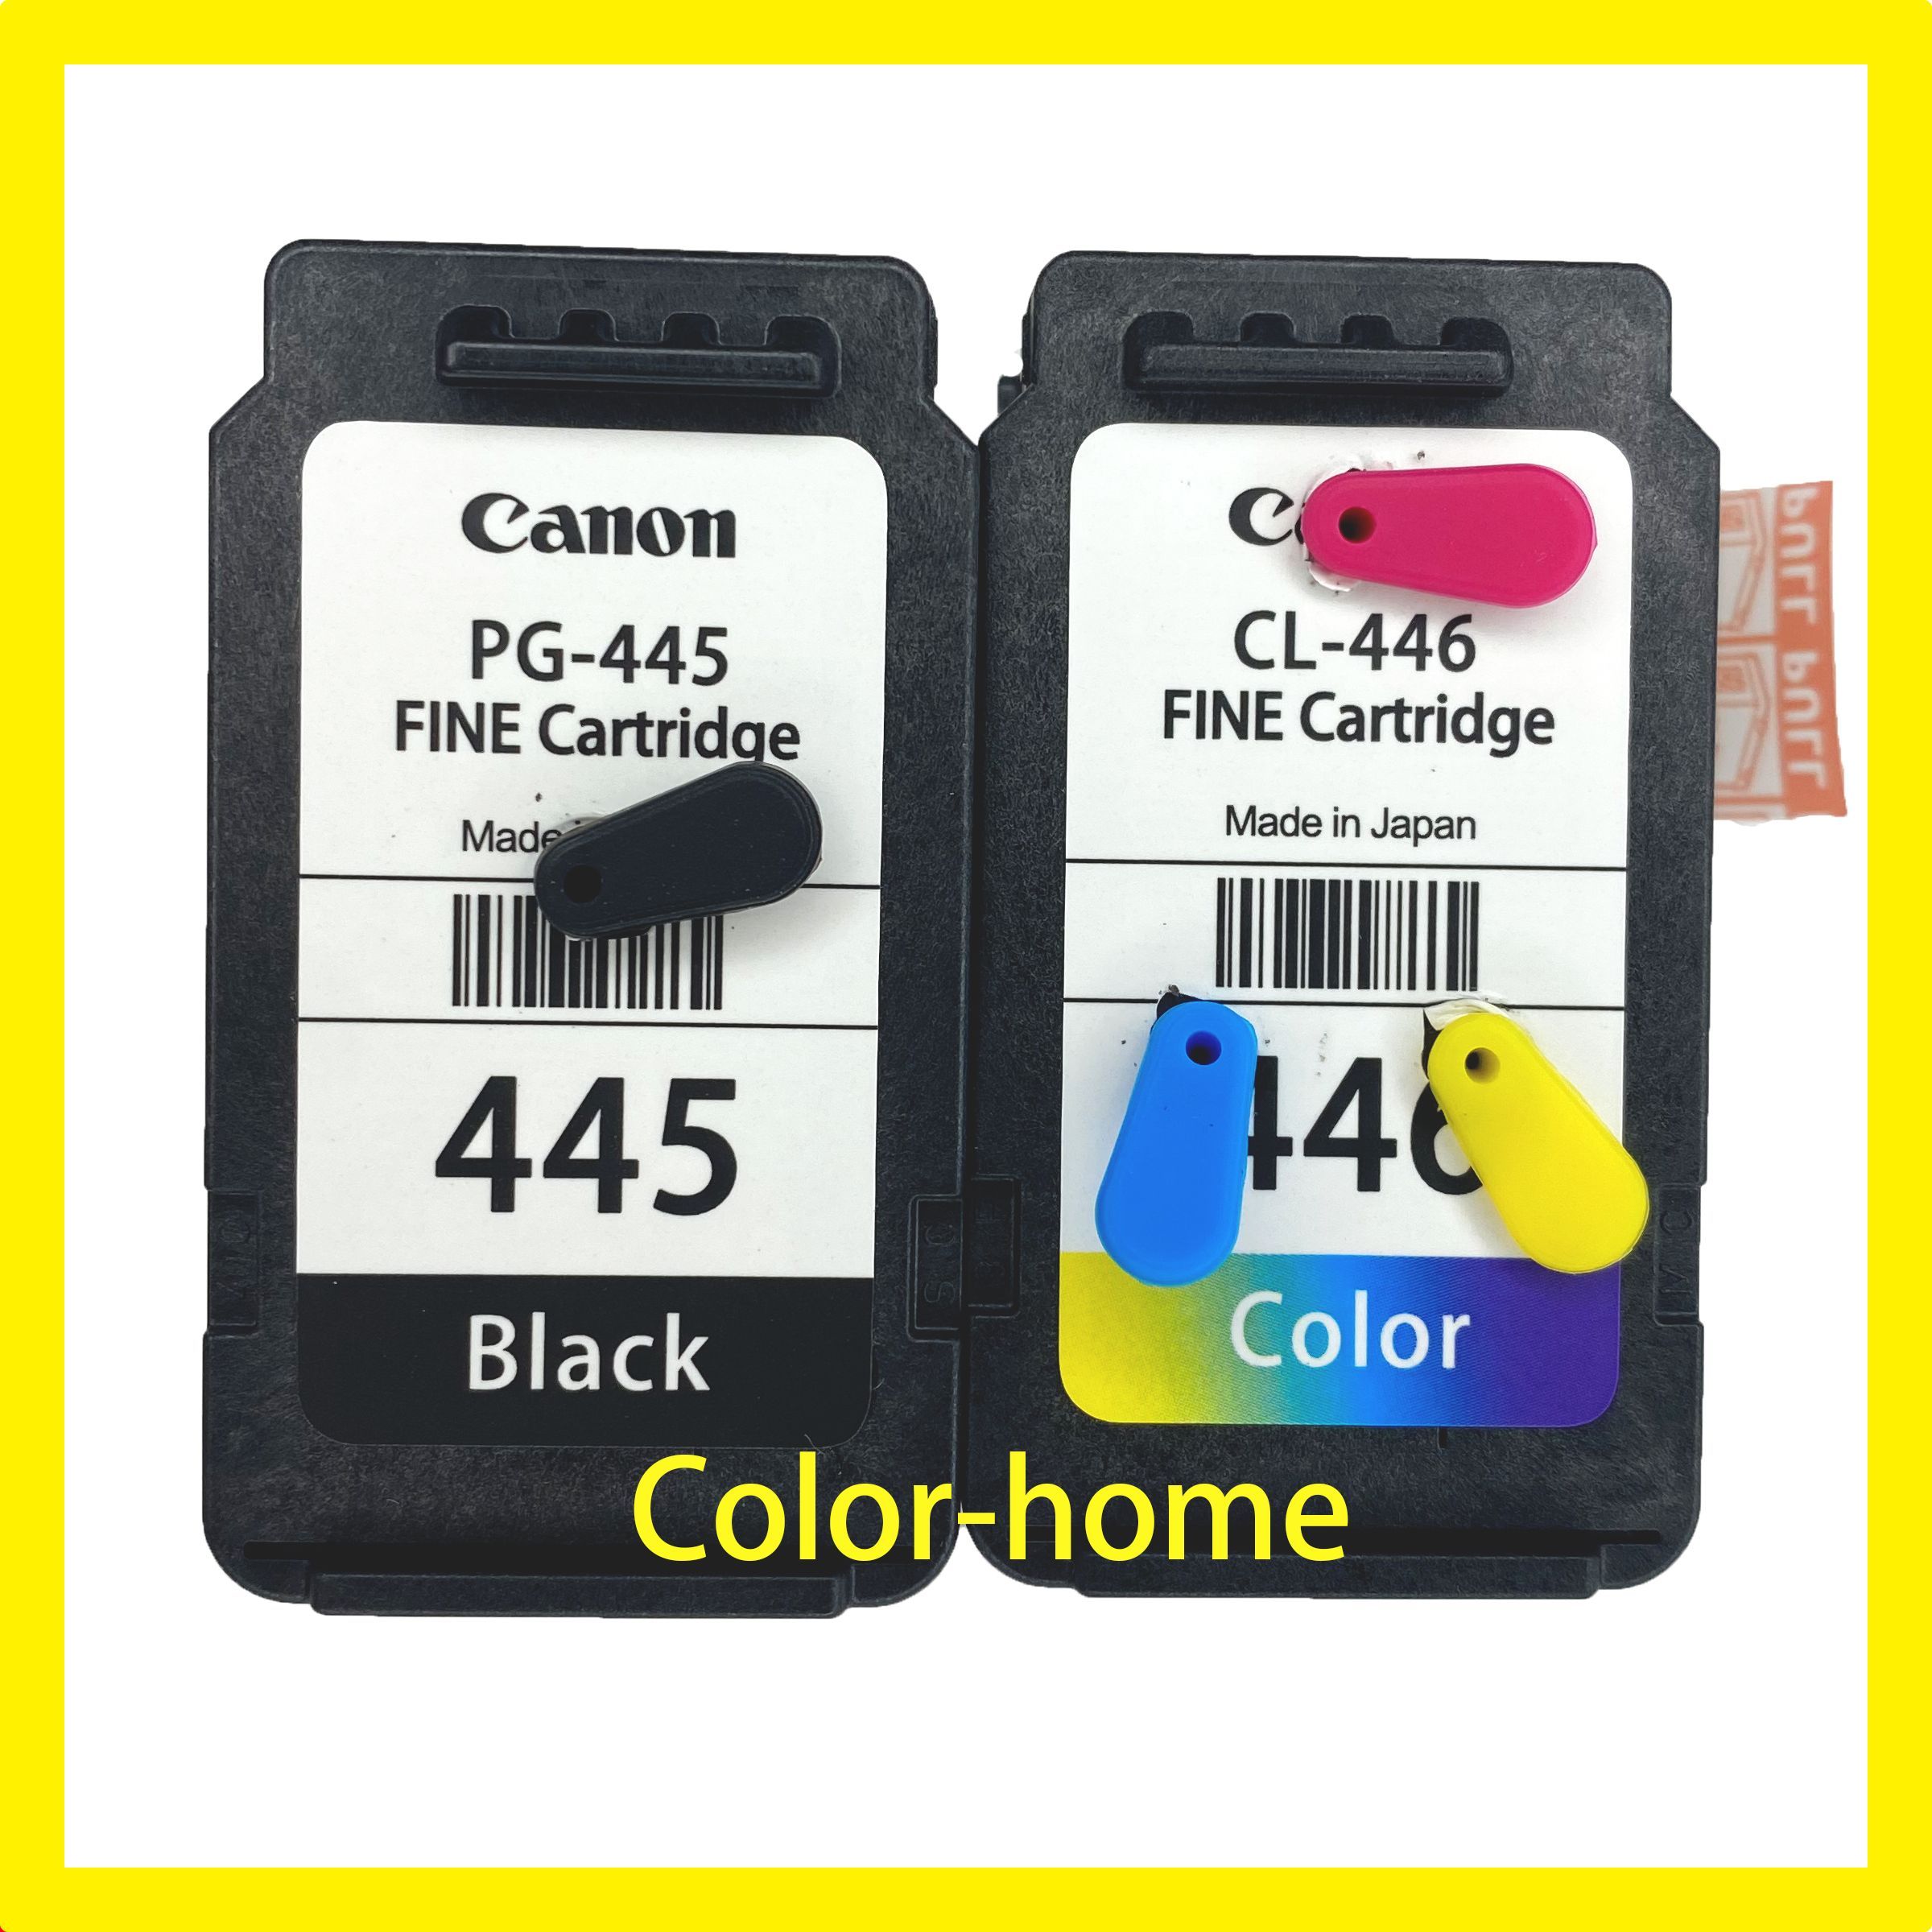 Canon PIXMA mg2540s. Canon PIXMA mg2440. PG-445. Есть ли чип на картриджах 445 и 446.